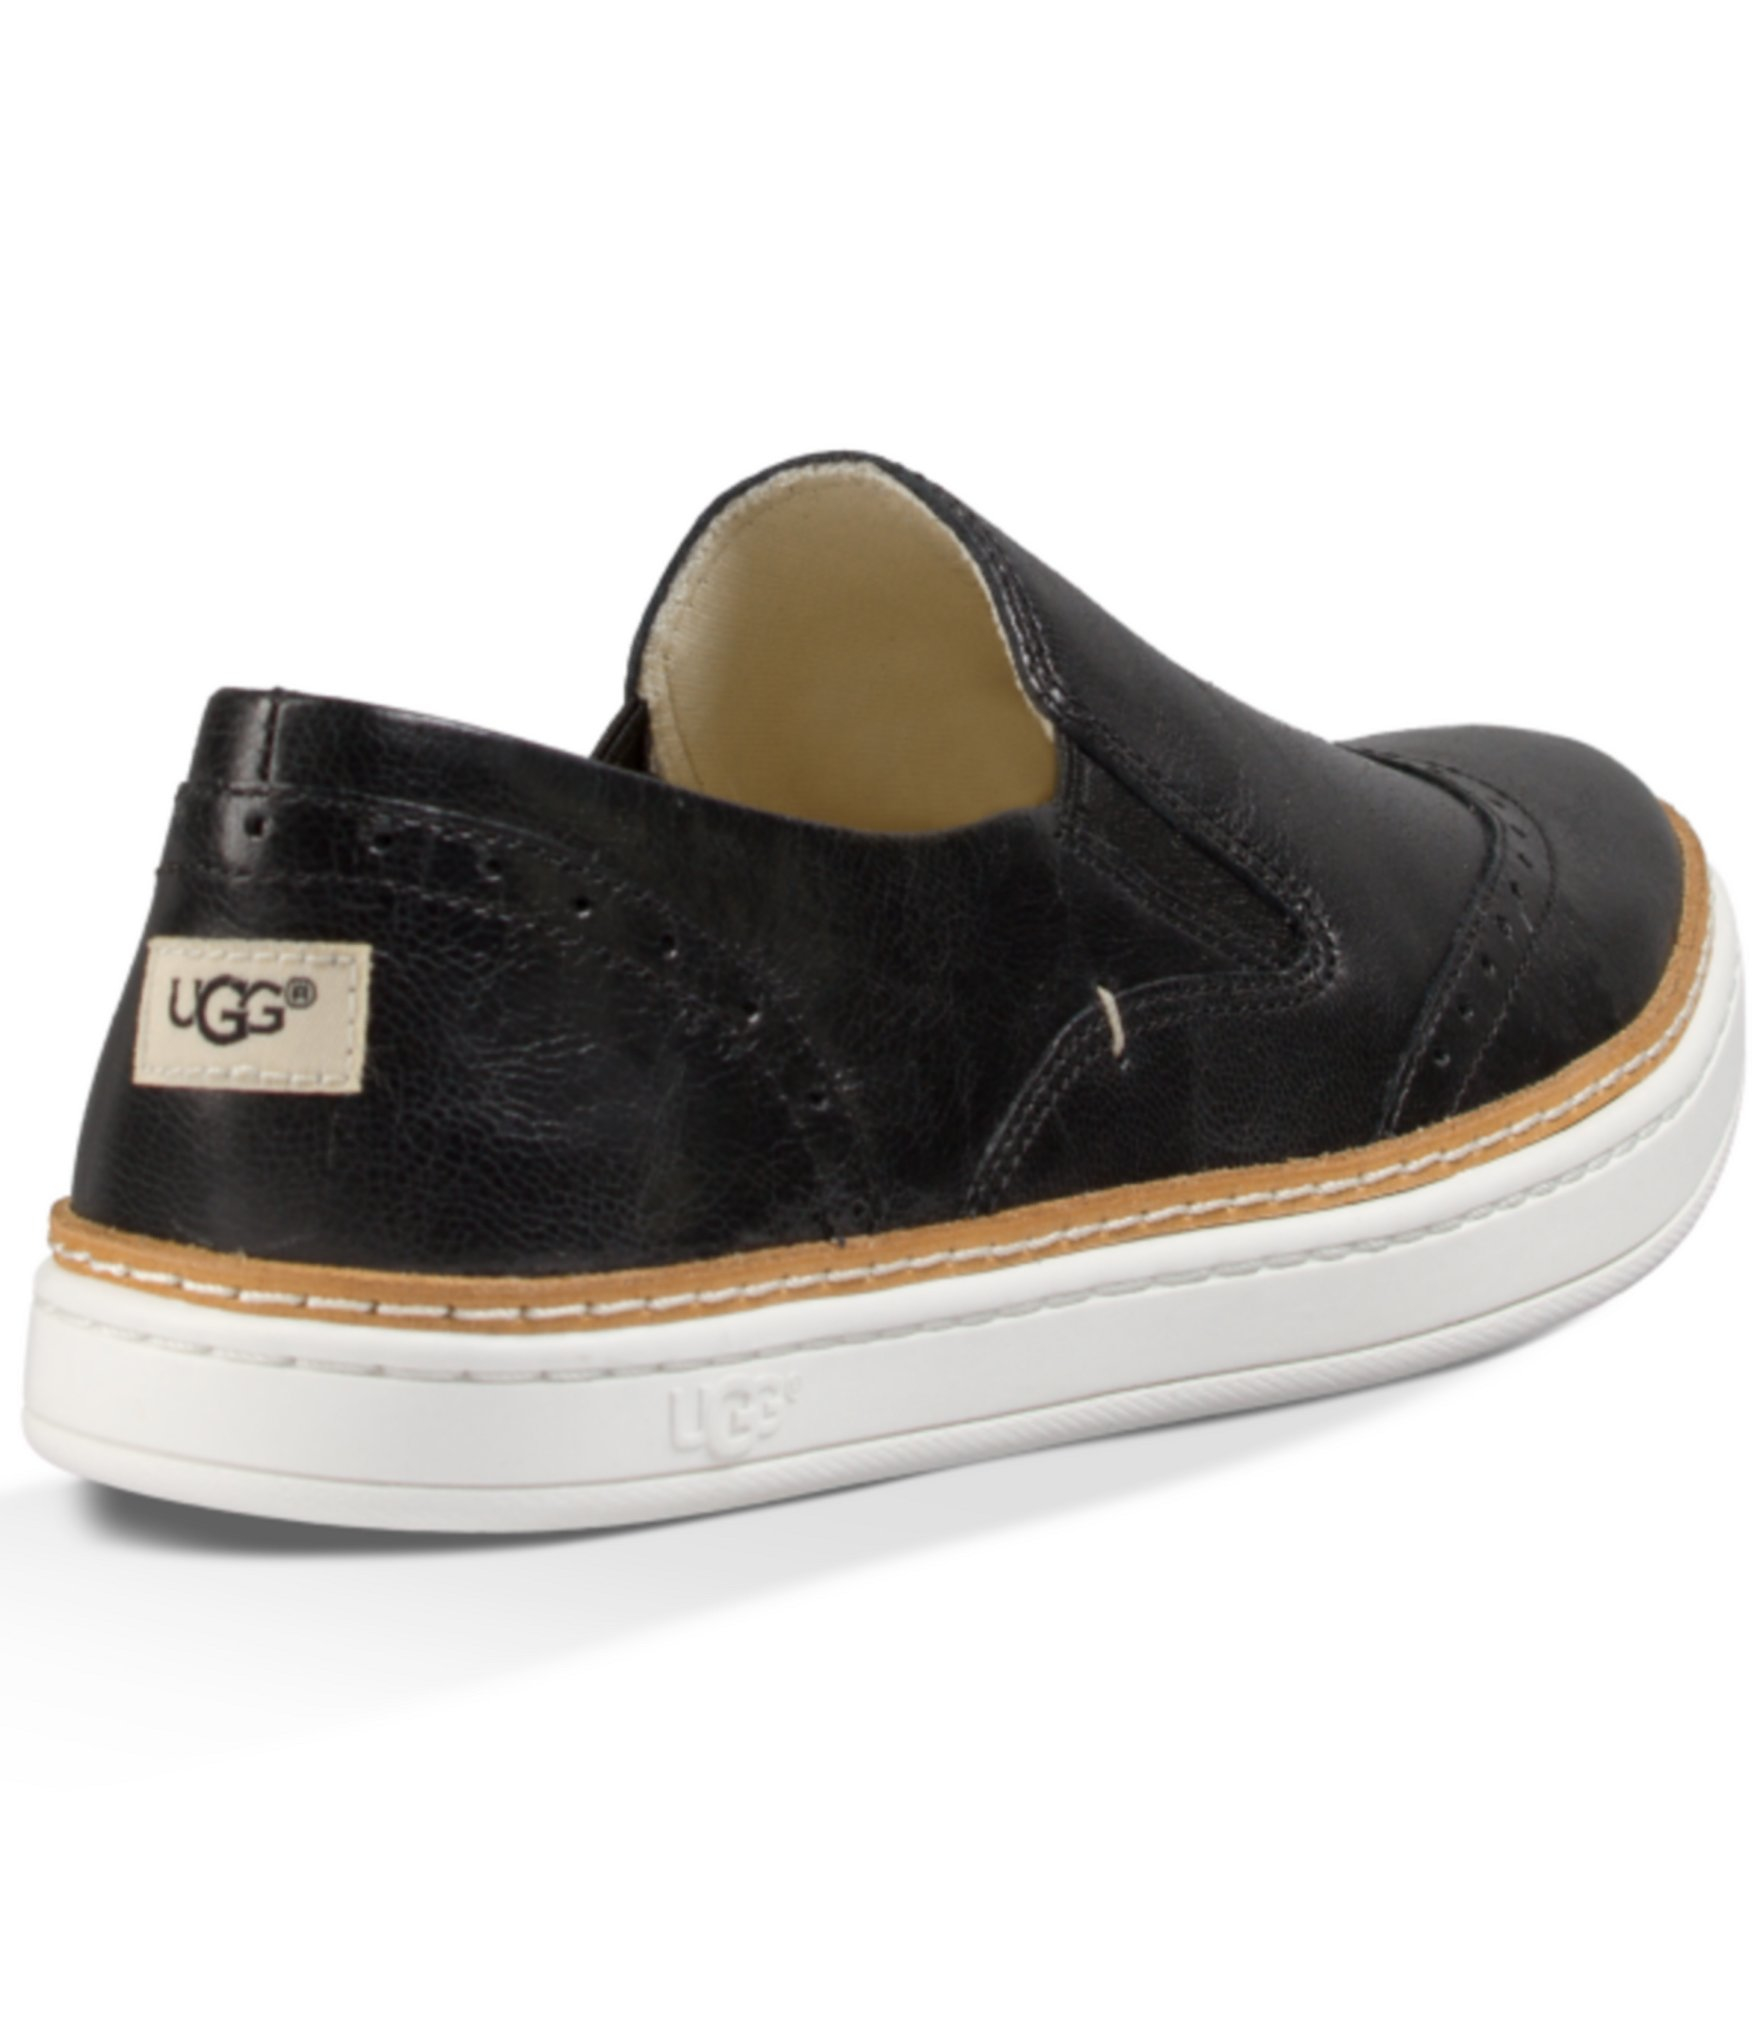 UGG ® Hadria Slip On Sneakers in Black for Men - Lyst